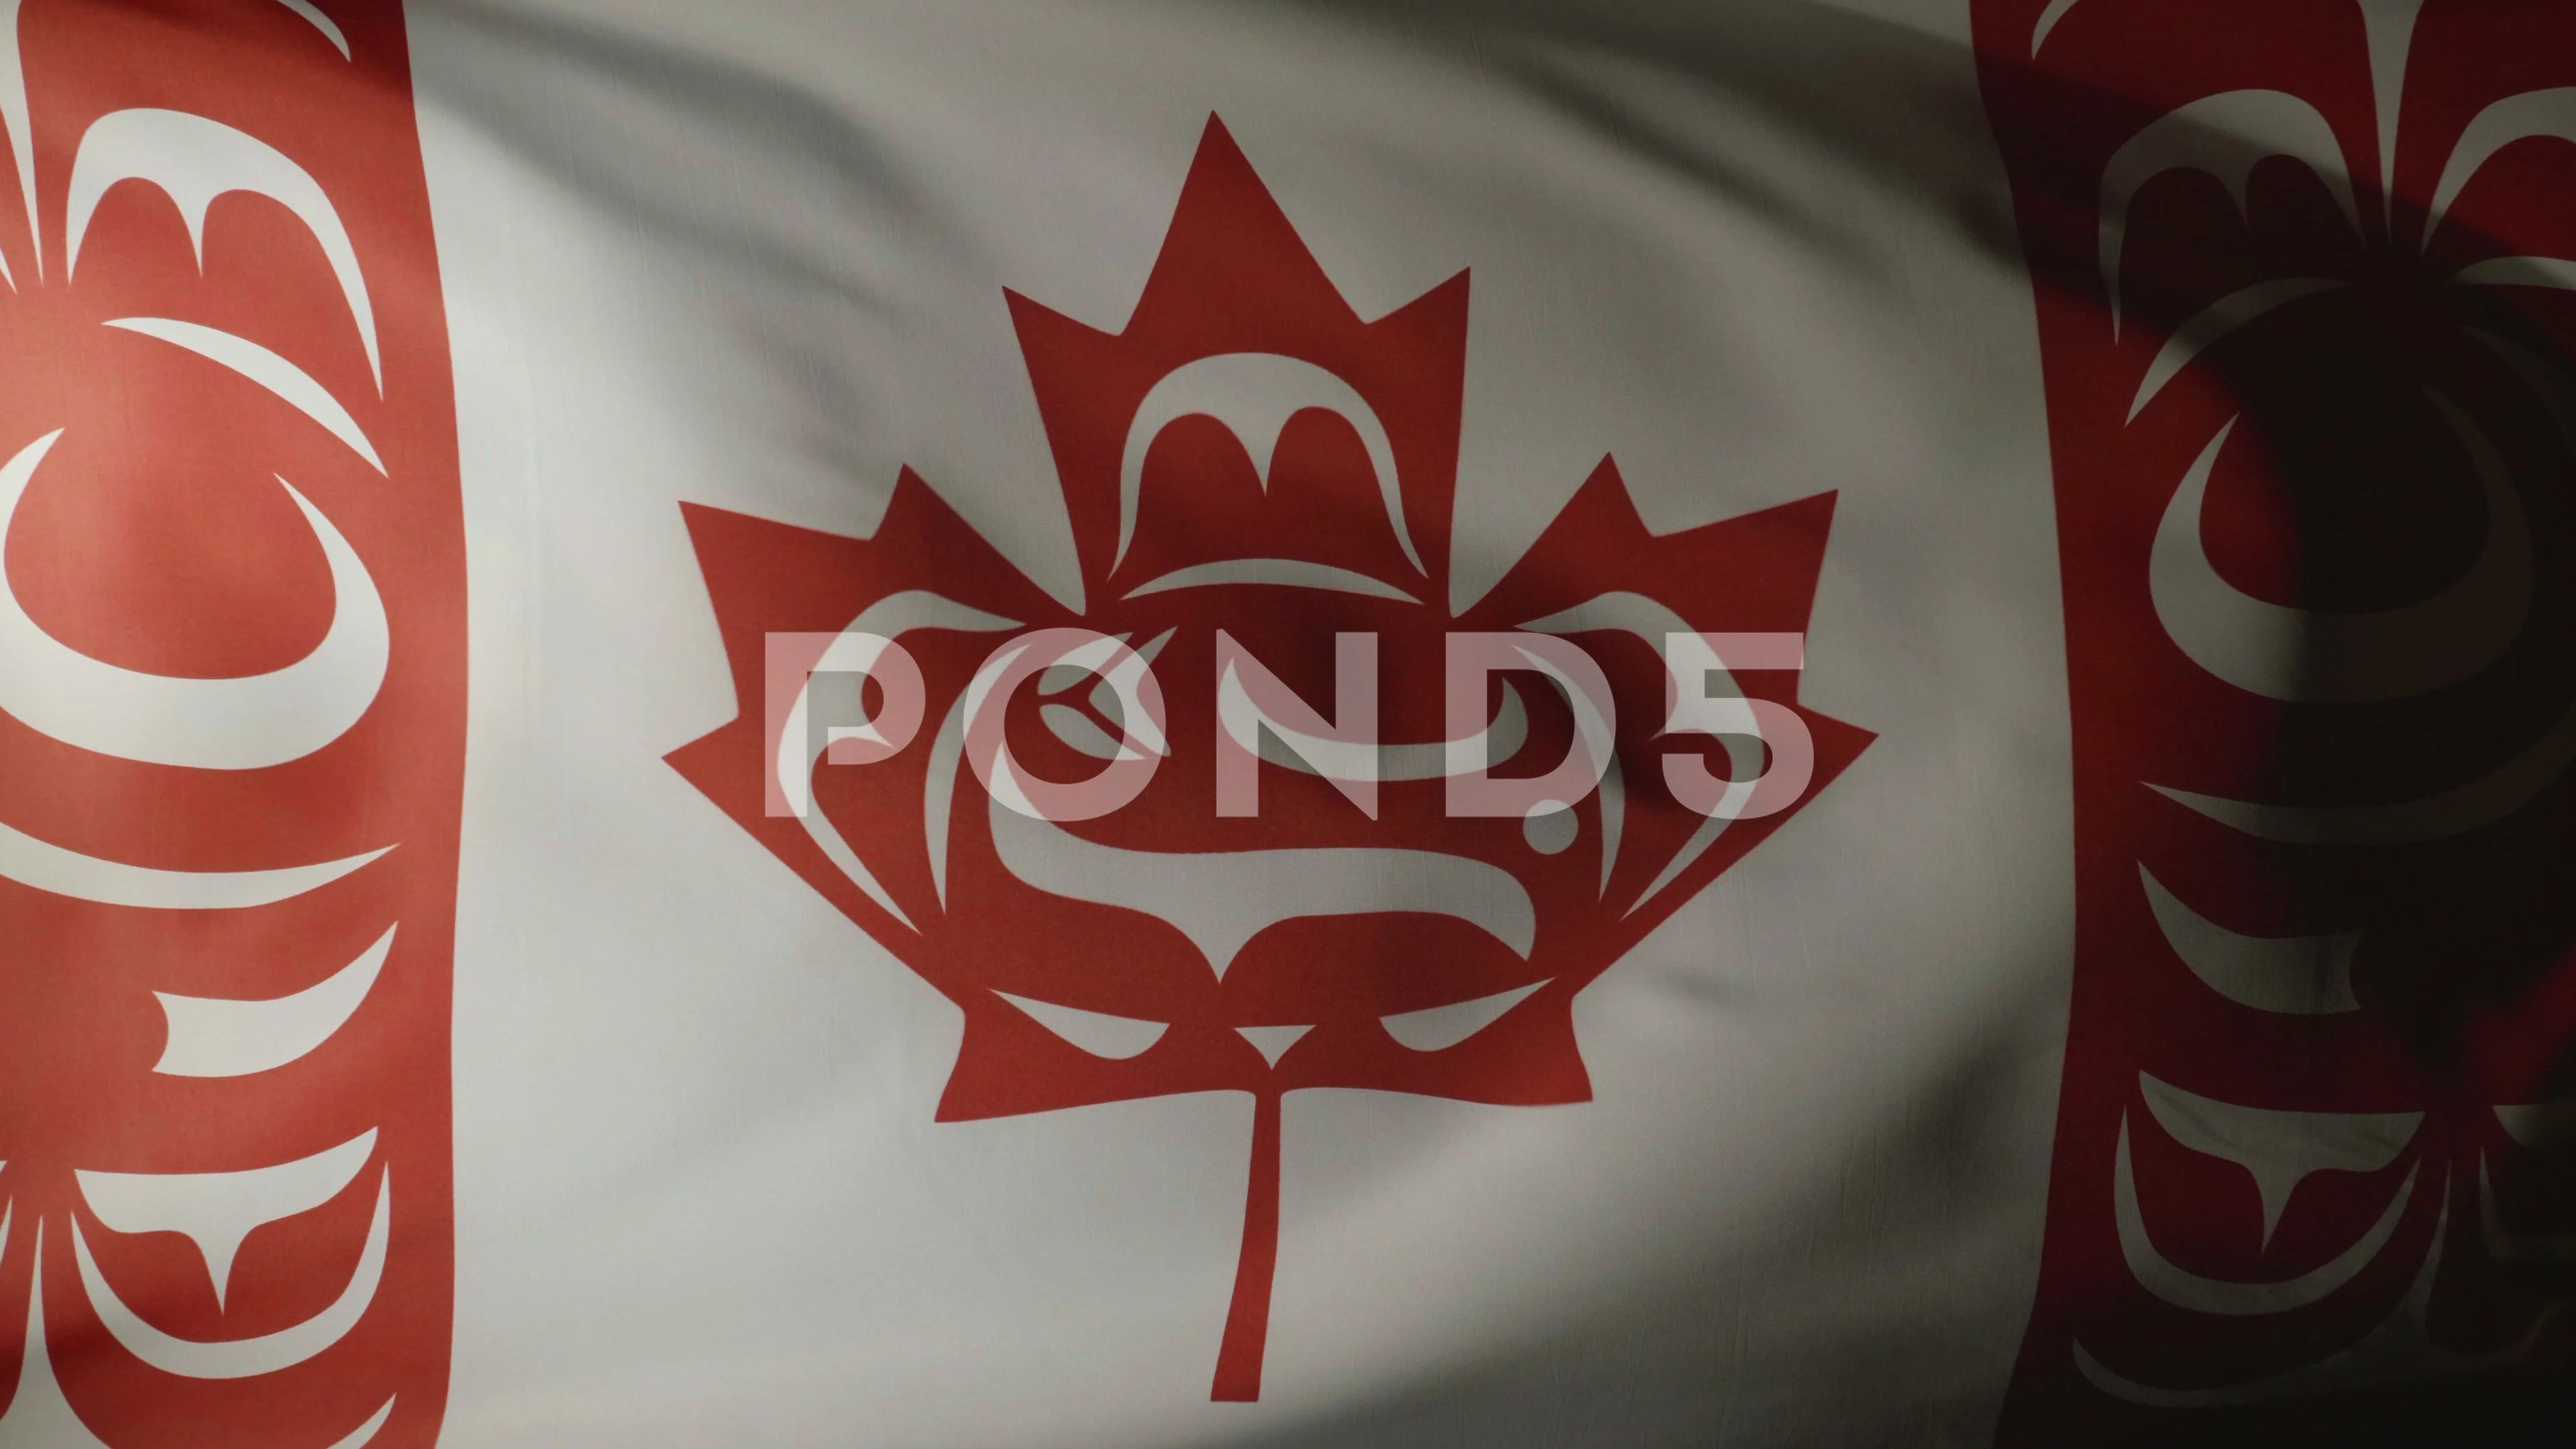 native canadian flag